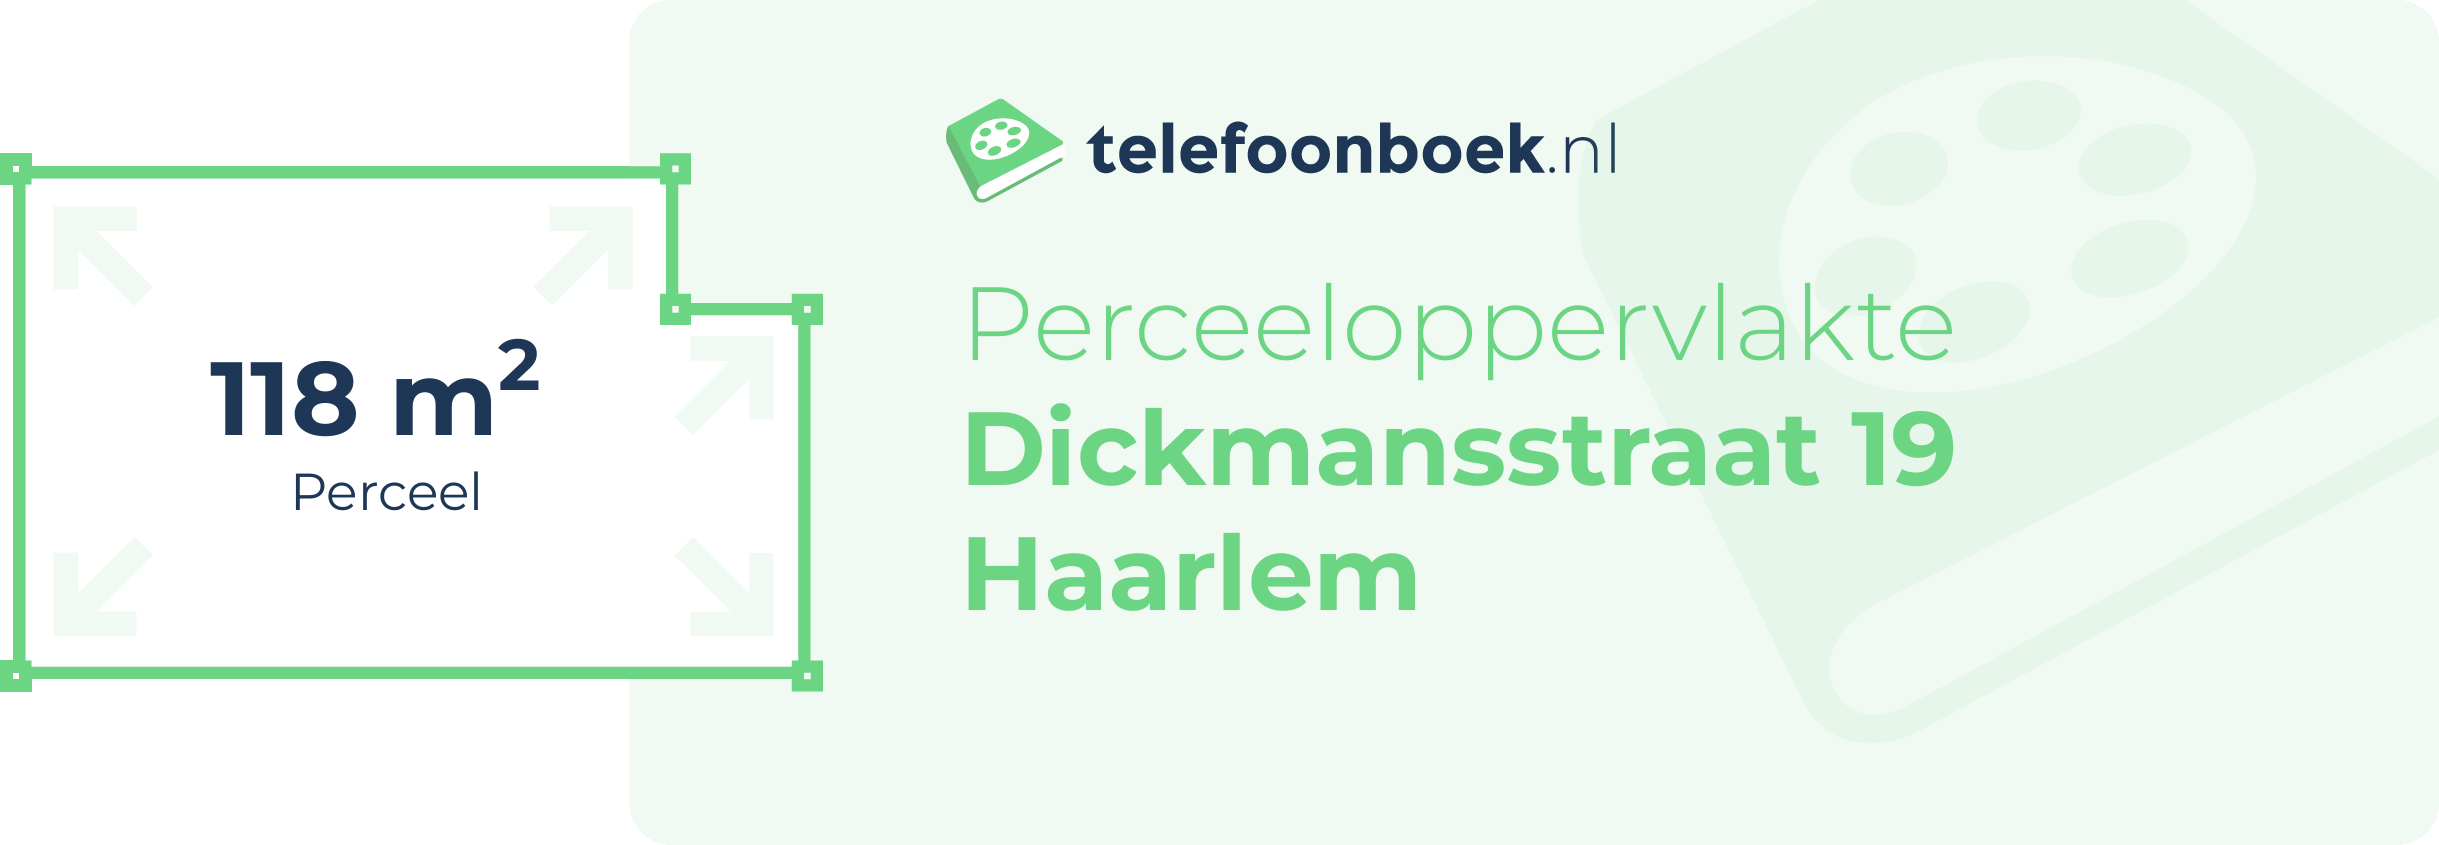 Perceeloppervlakte Dickmansstraat 19 Haarlem